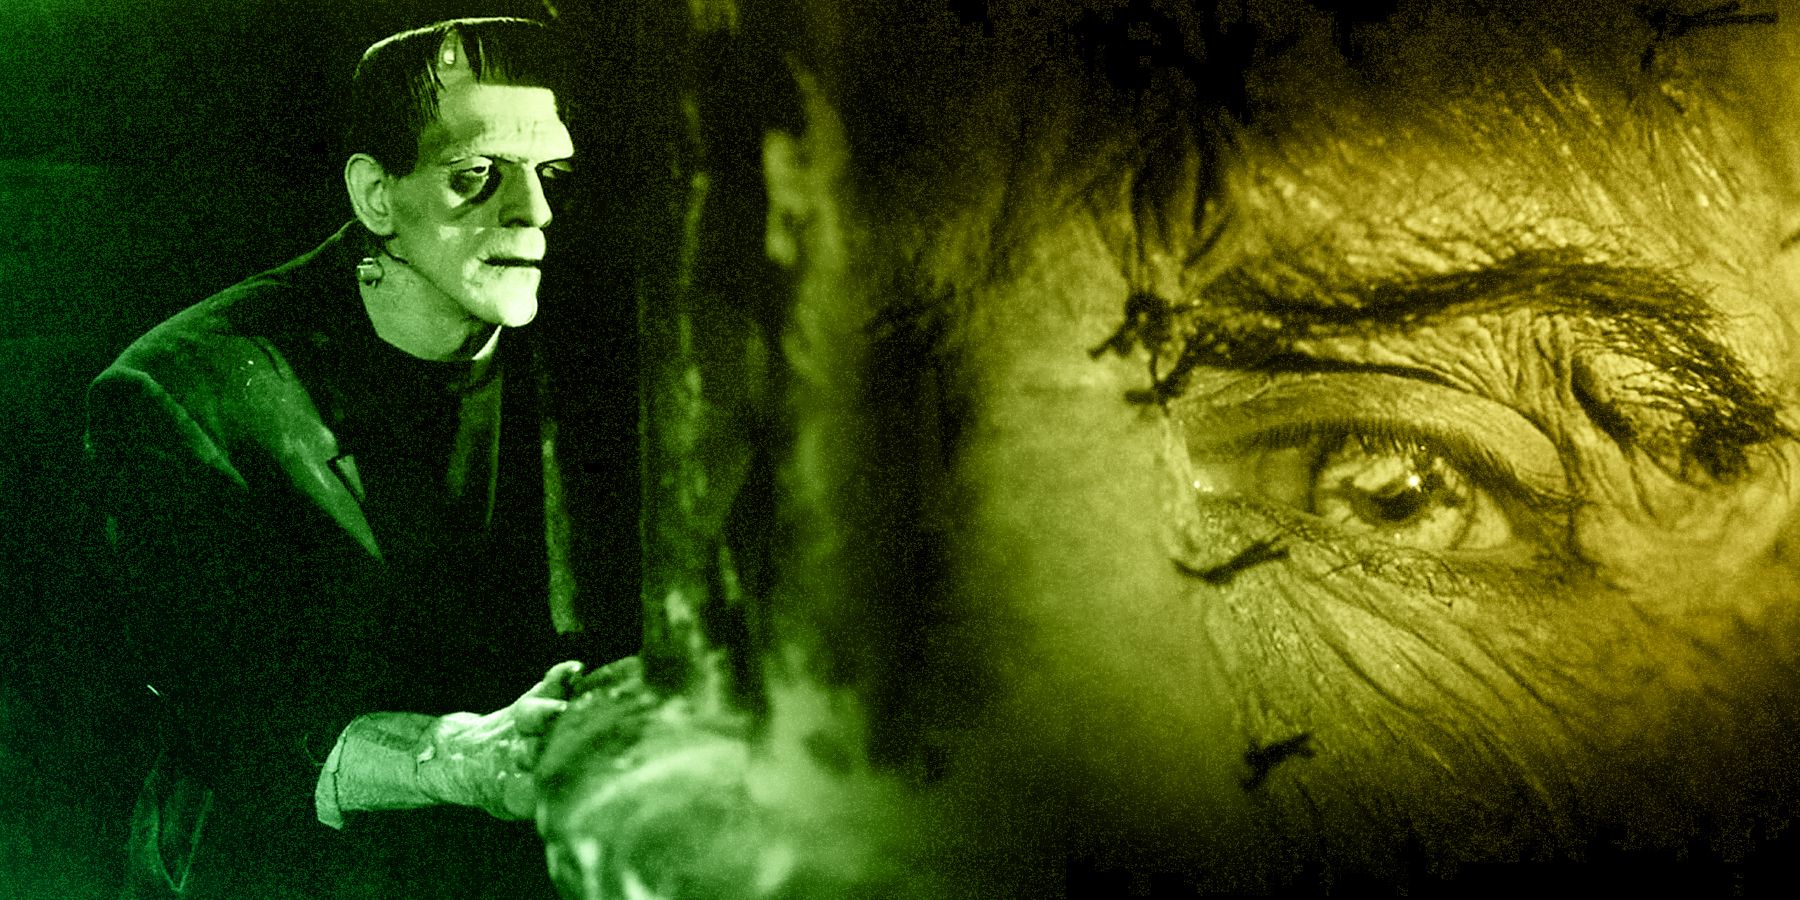 Boris Karloff as the Monster in 1931's Frankenstein and Robert De Niro as the Monster in 1994's Mary Shelley's Frankenstein